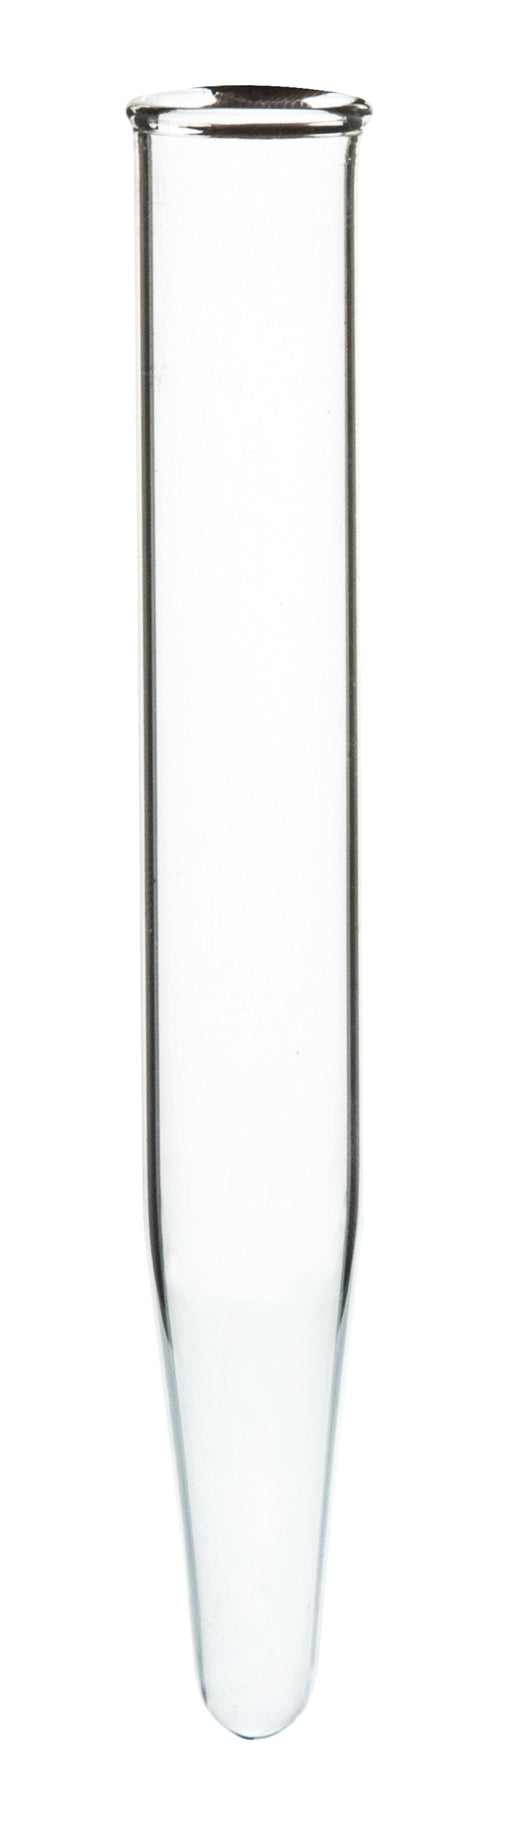 Centrifuge Tube, 5ml - Borosilicate 3.3 Glass, Conical Shape, Ungraduated - Eisco Labs